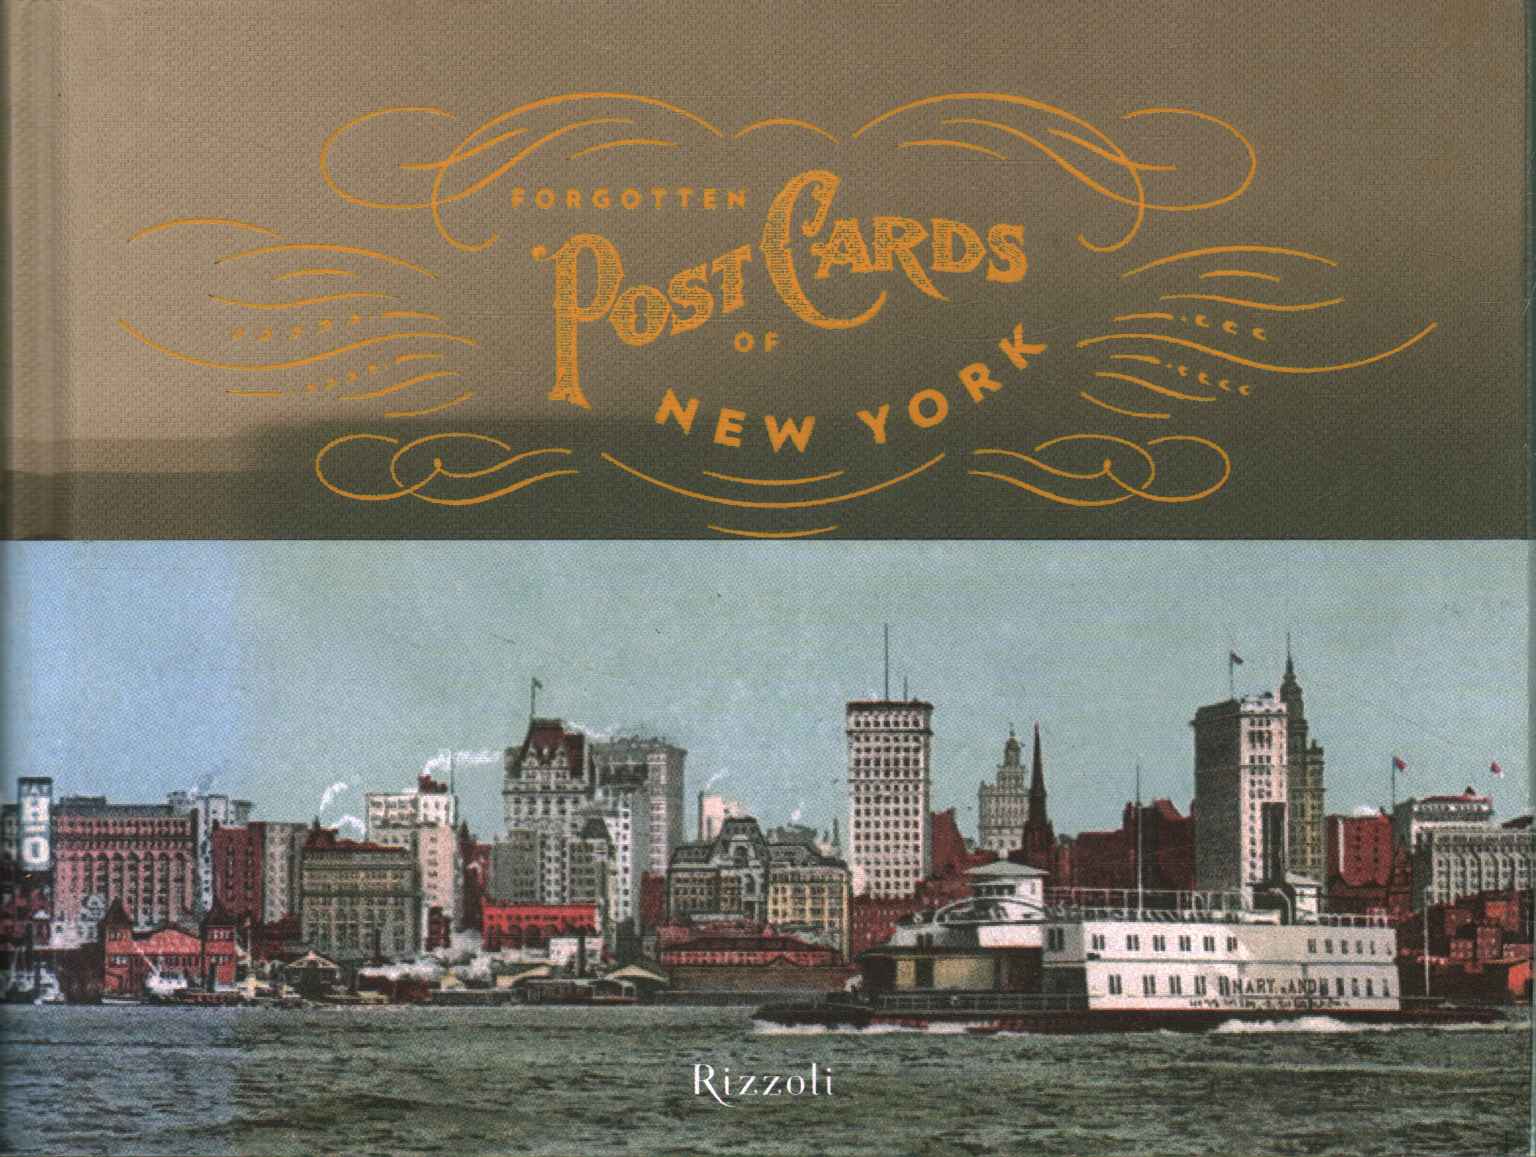 Forgotten postcards of New York